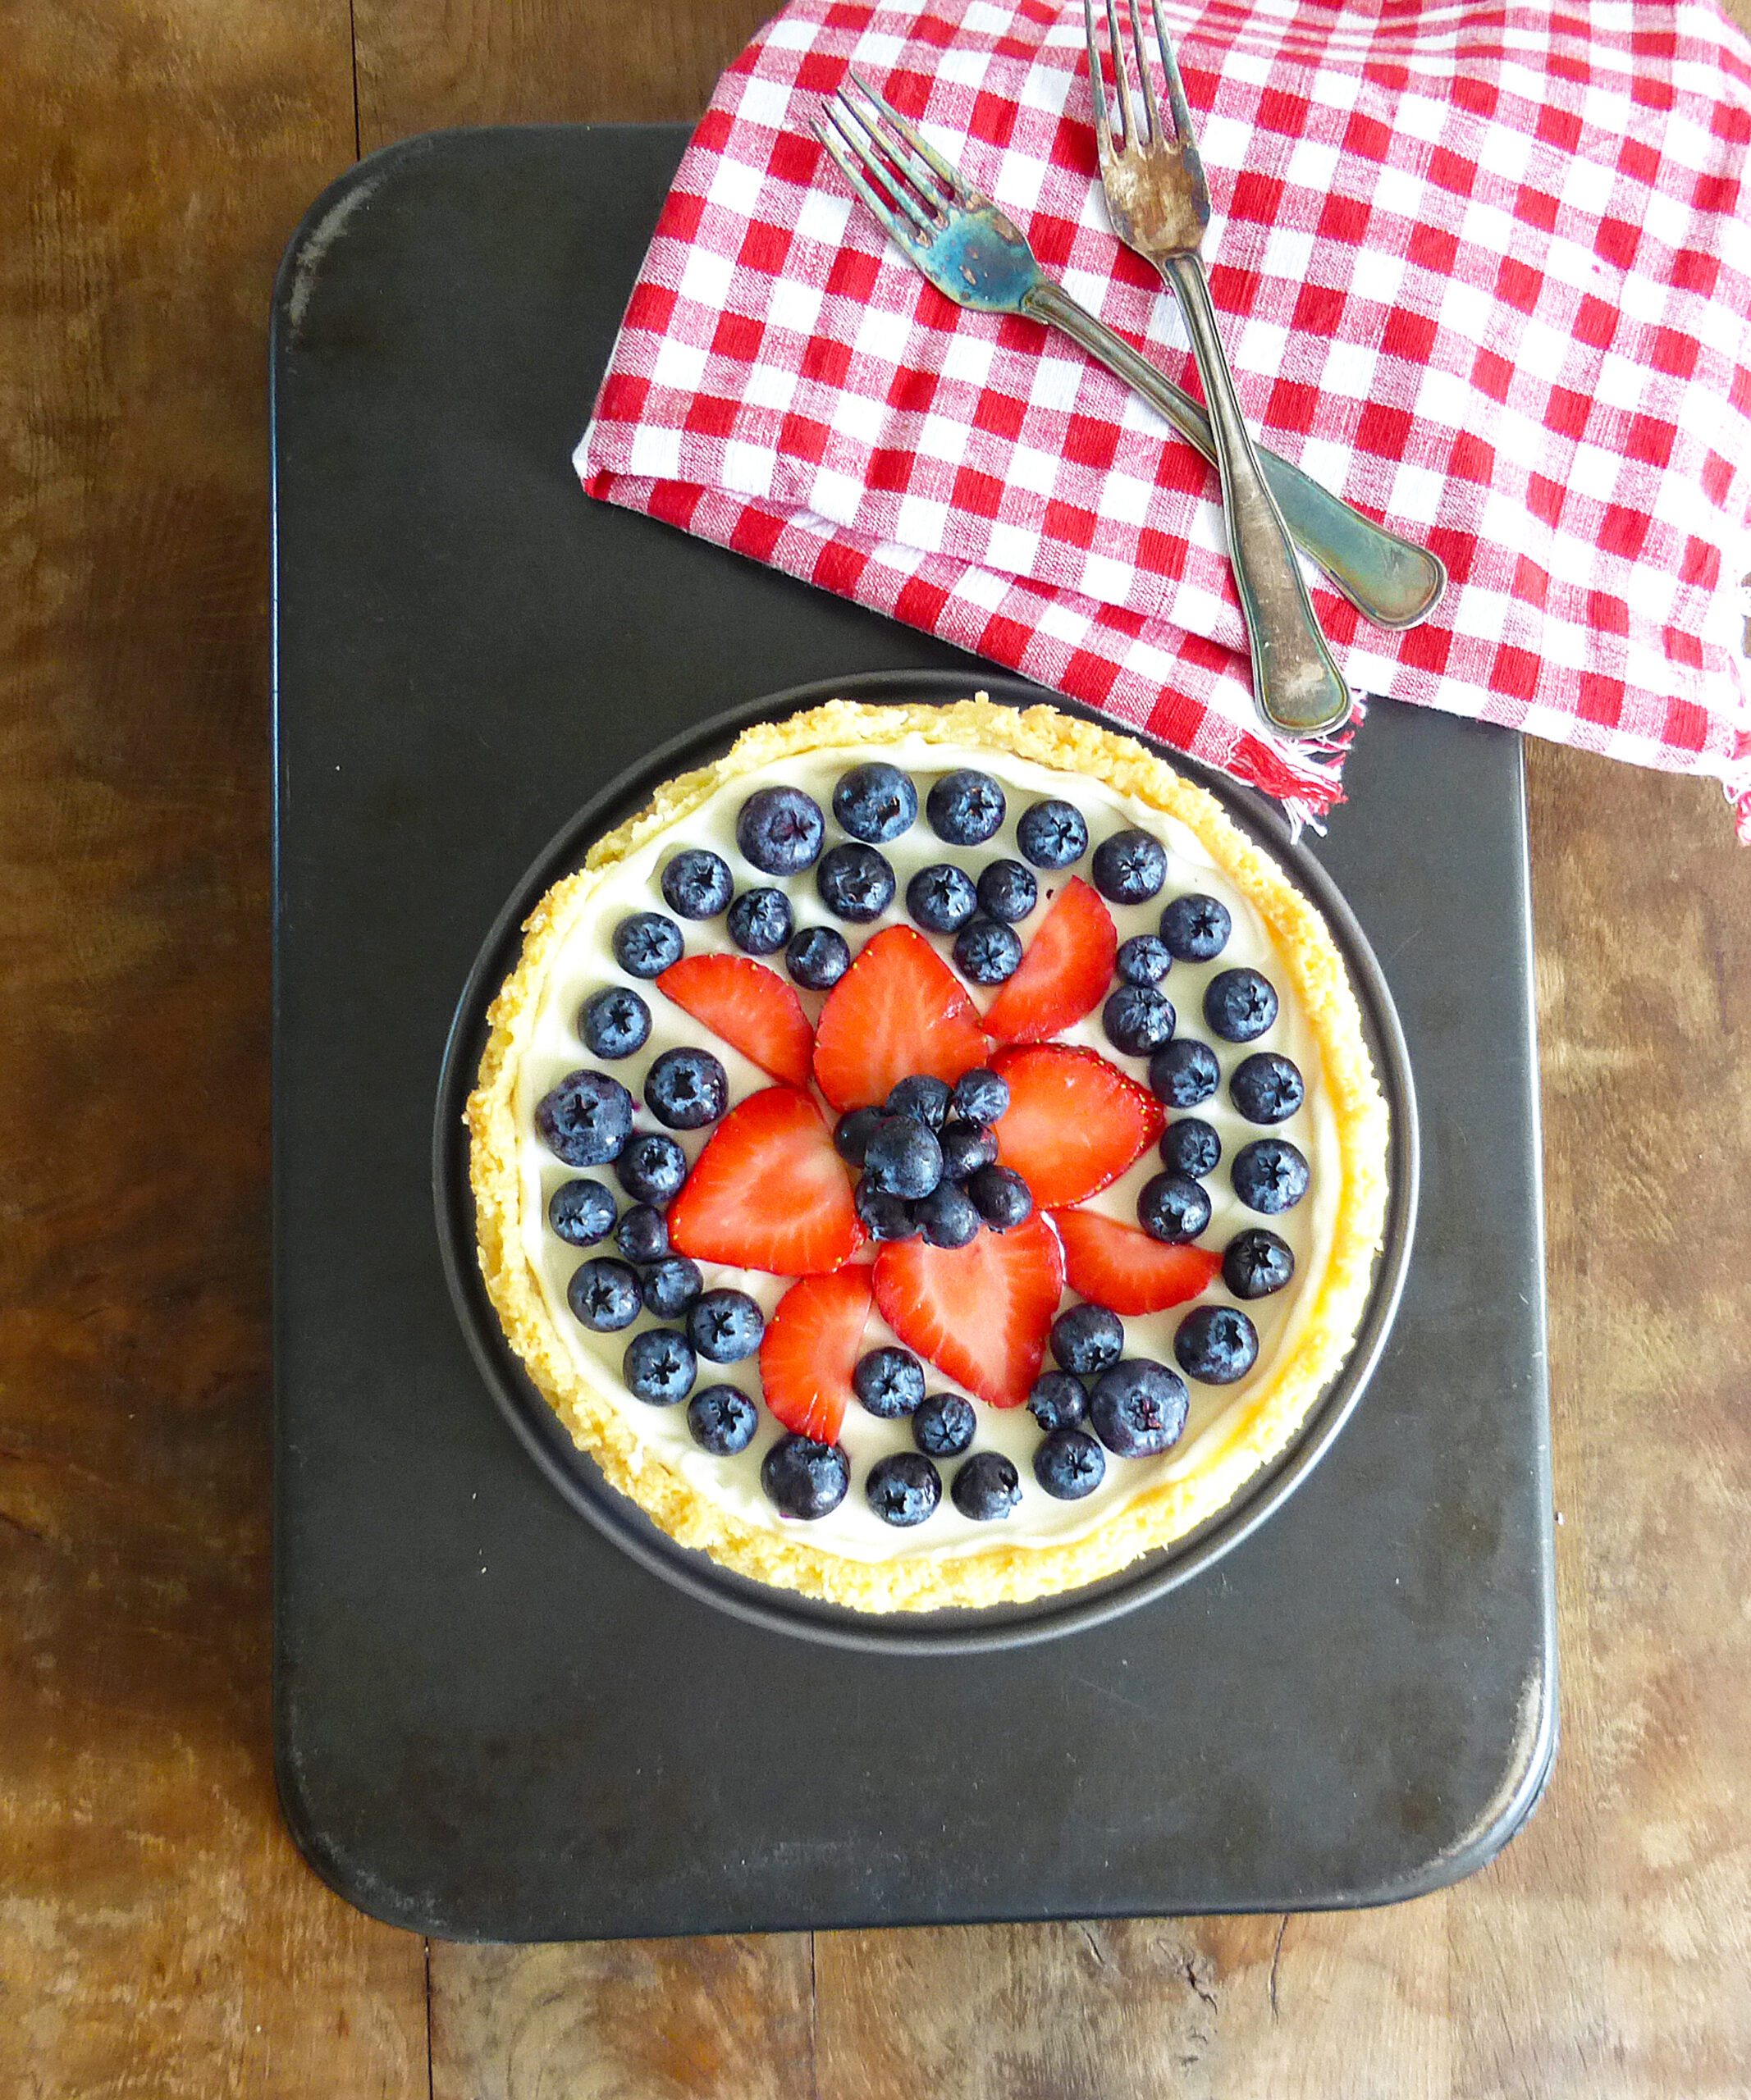 Gluten Free Lemon Cookie Pizza with Strawberries & Blueberries